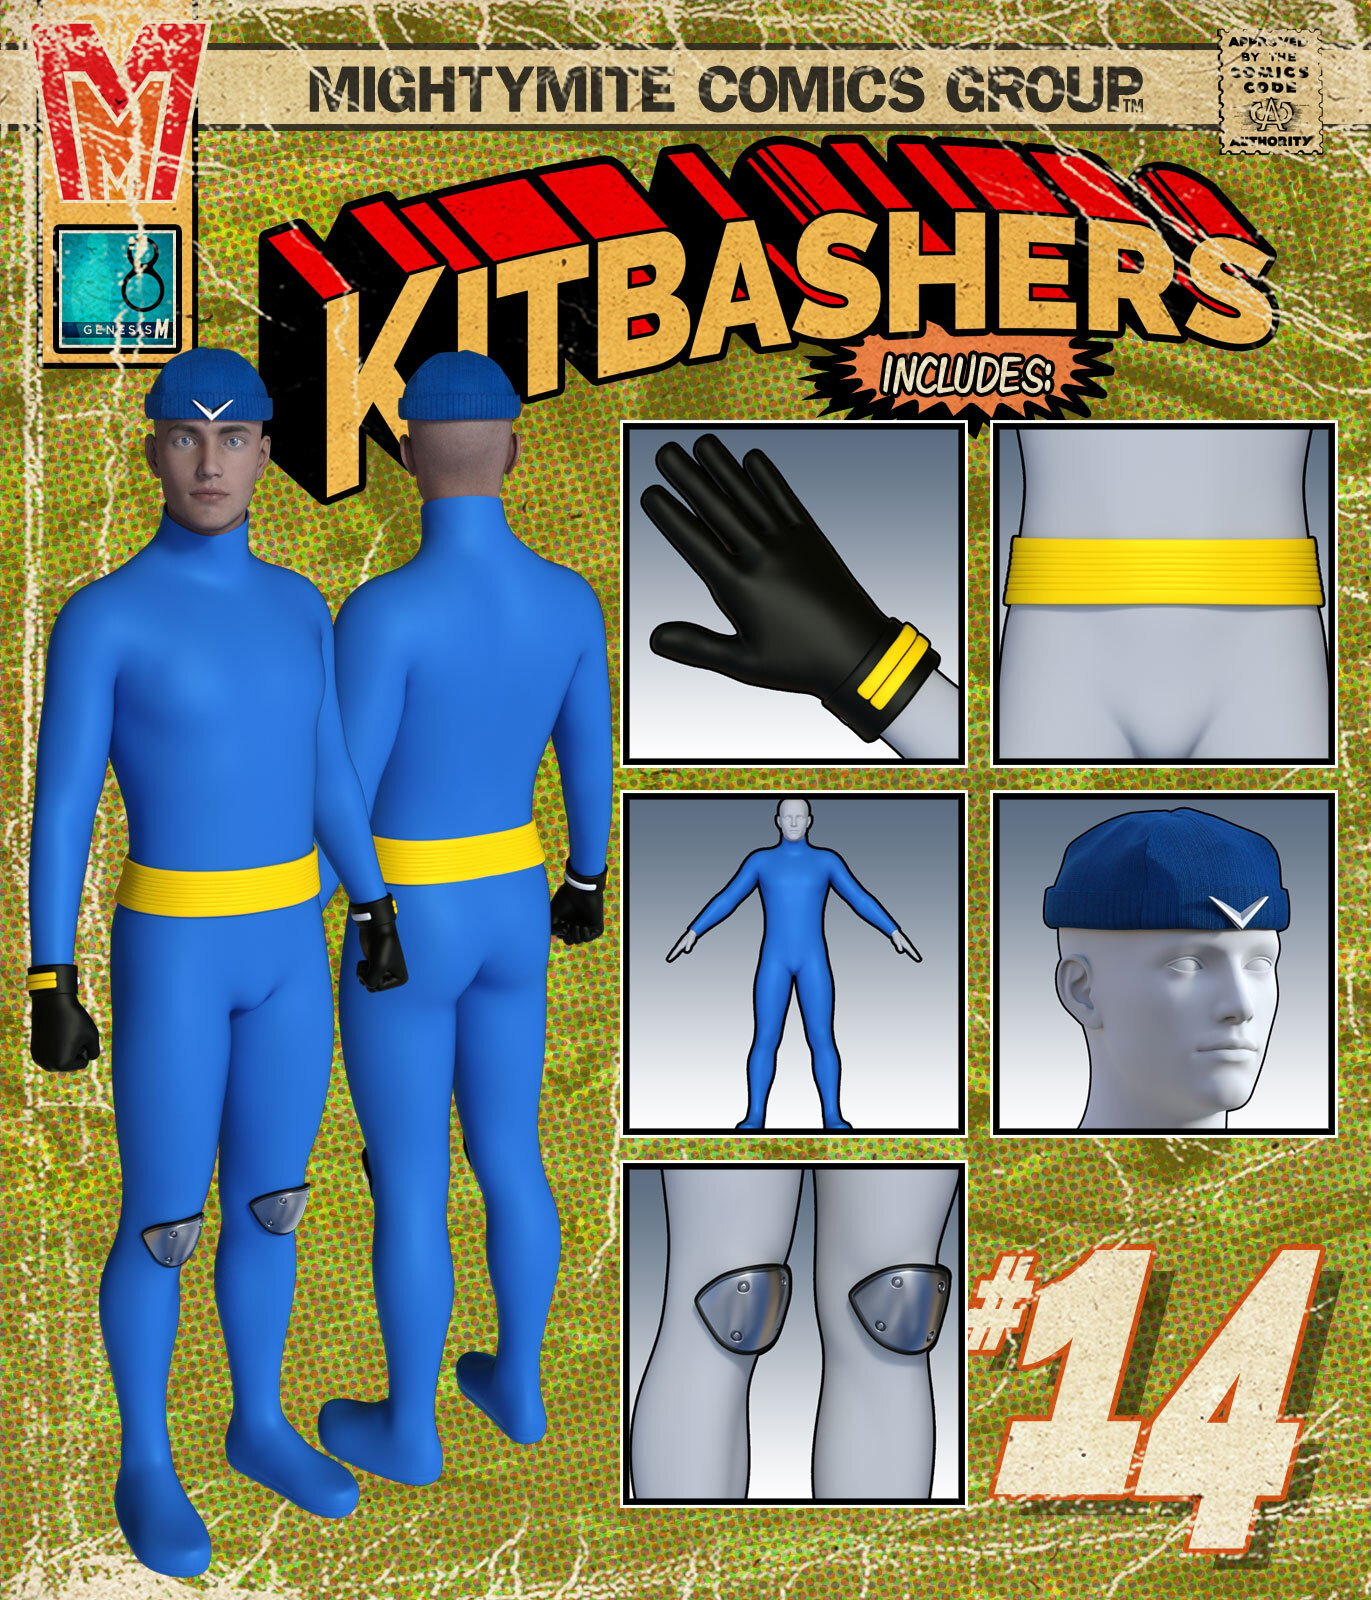 Kitbashers 014 MMG8M by: MightyMite, 3D Models by Daz 3D